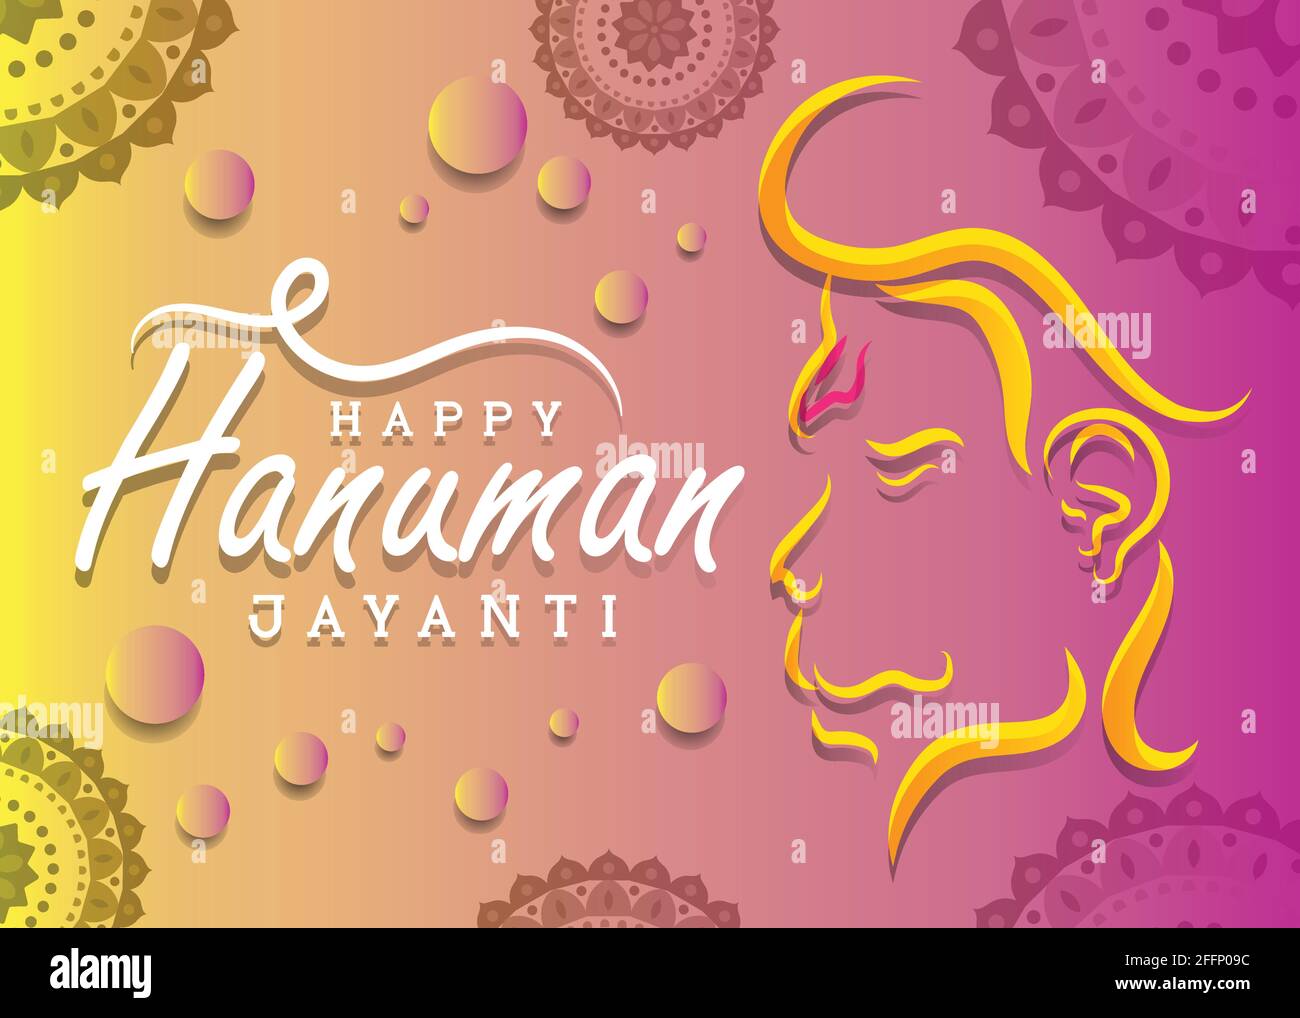 Happy Hanuman Jayanti wallpaper poster vector, beautiful festival greeting card illustration , wishes background banner design Stock Vector